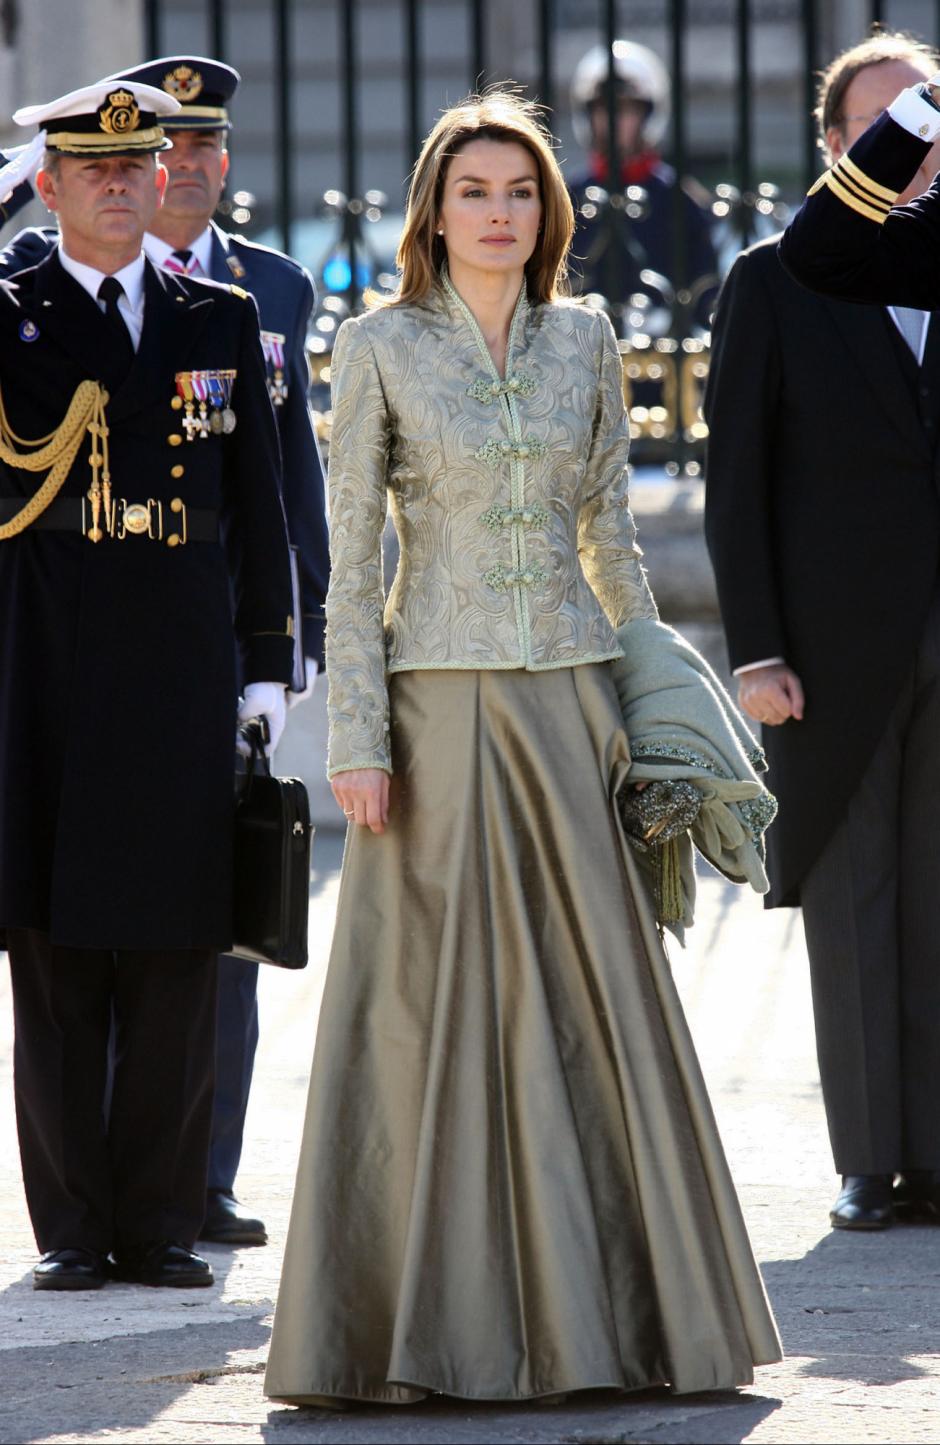 Princes of Asturias , Princess Letizia at the Plaza of Arms, for celebrated Military Easter.

© M. Cordoba  / Enfoque - 060109